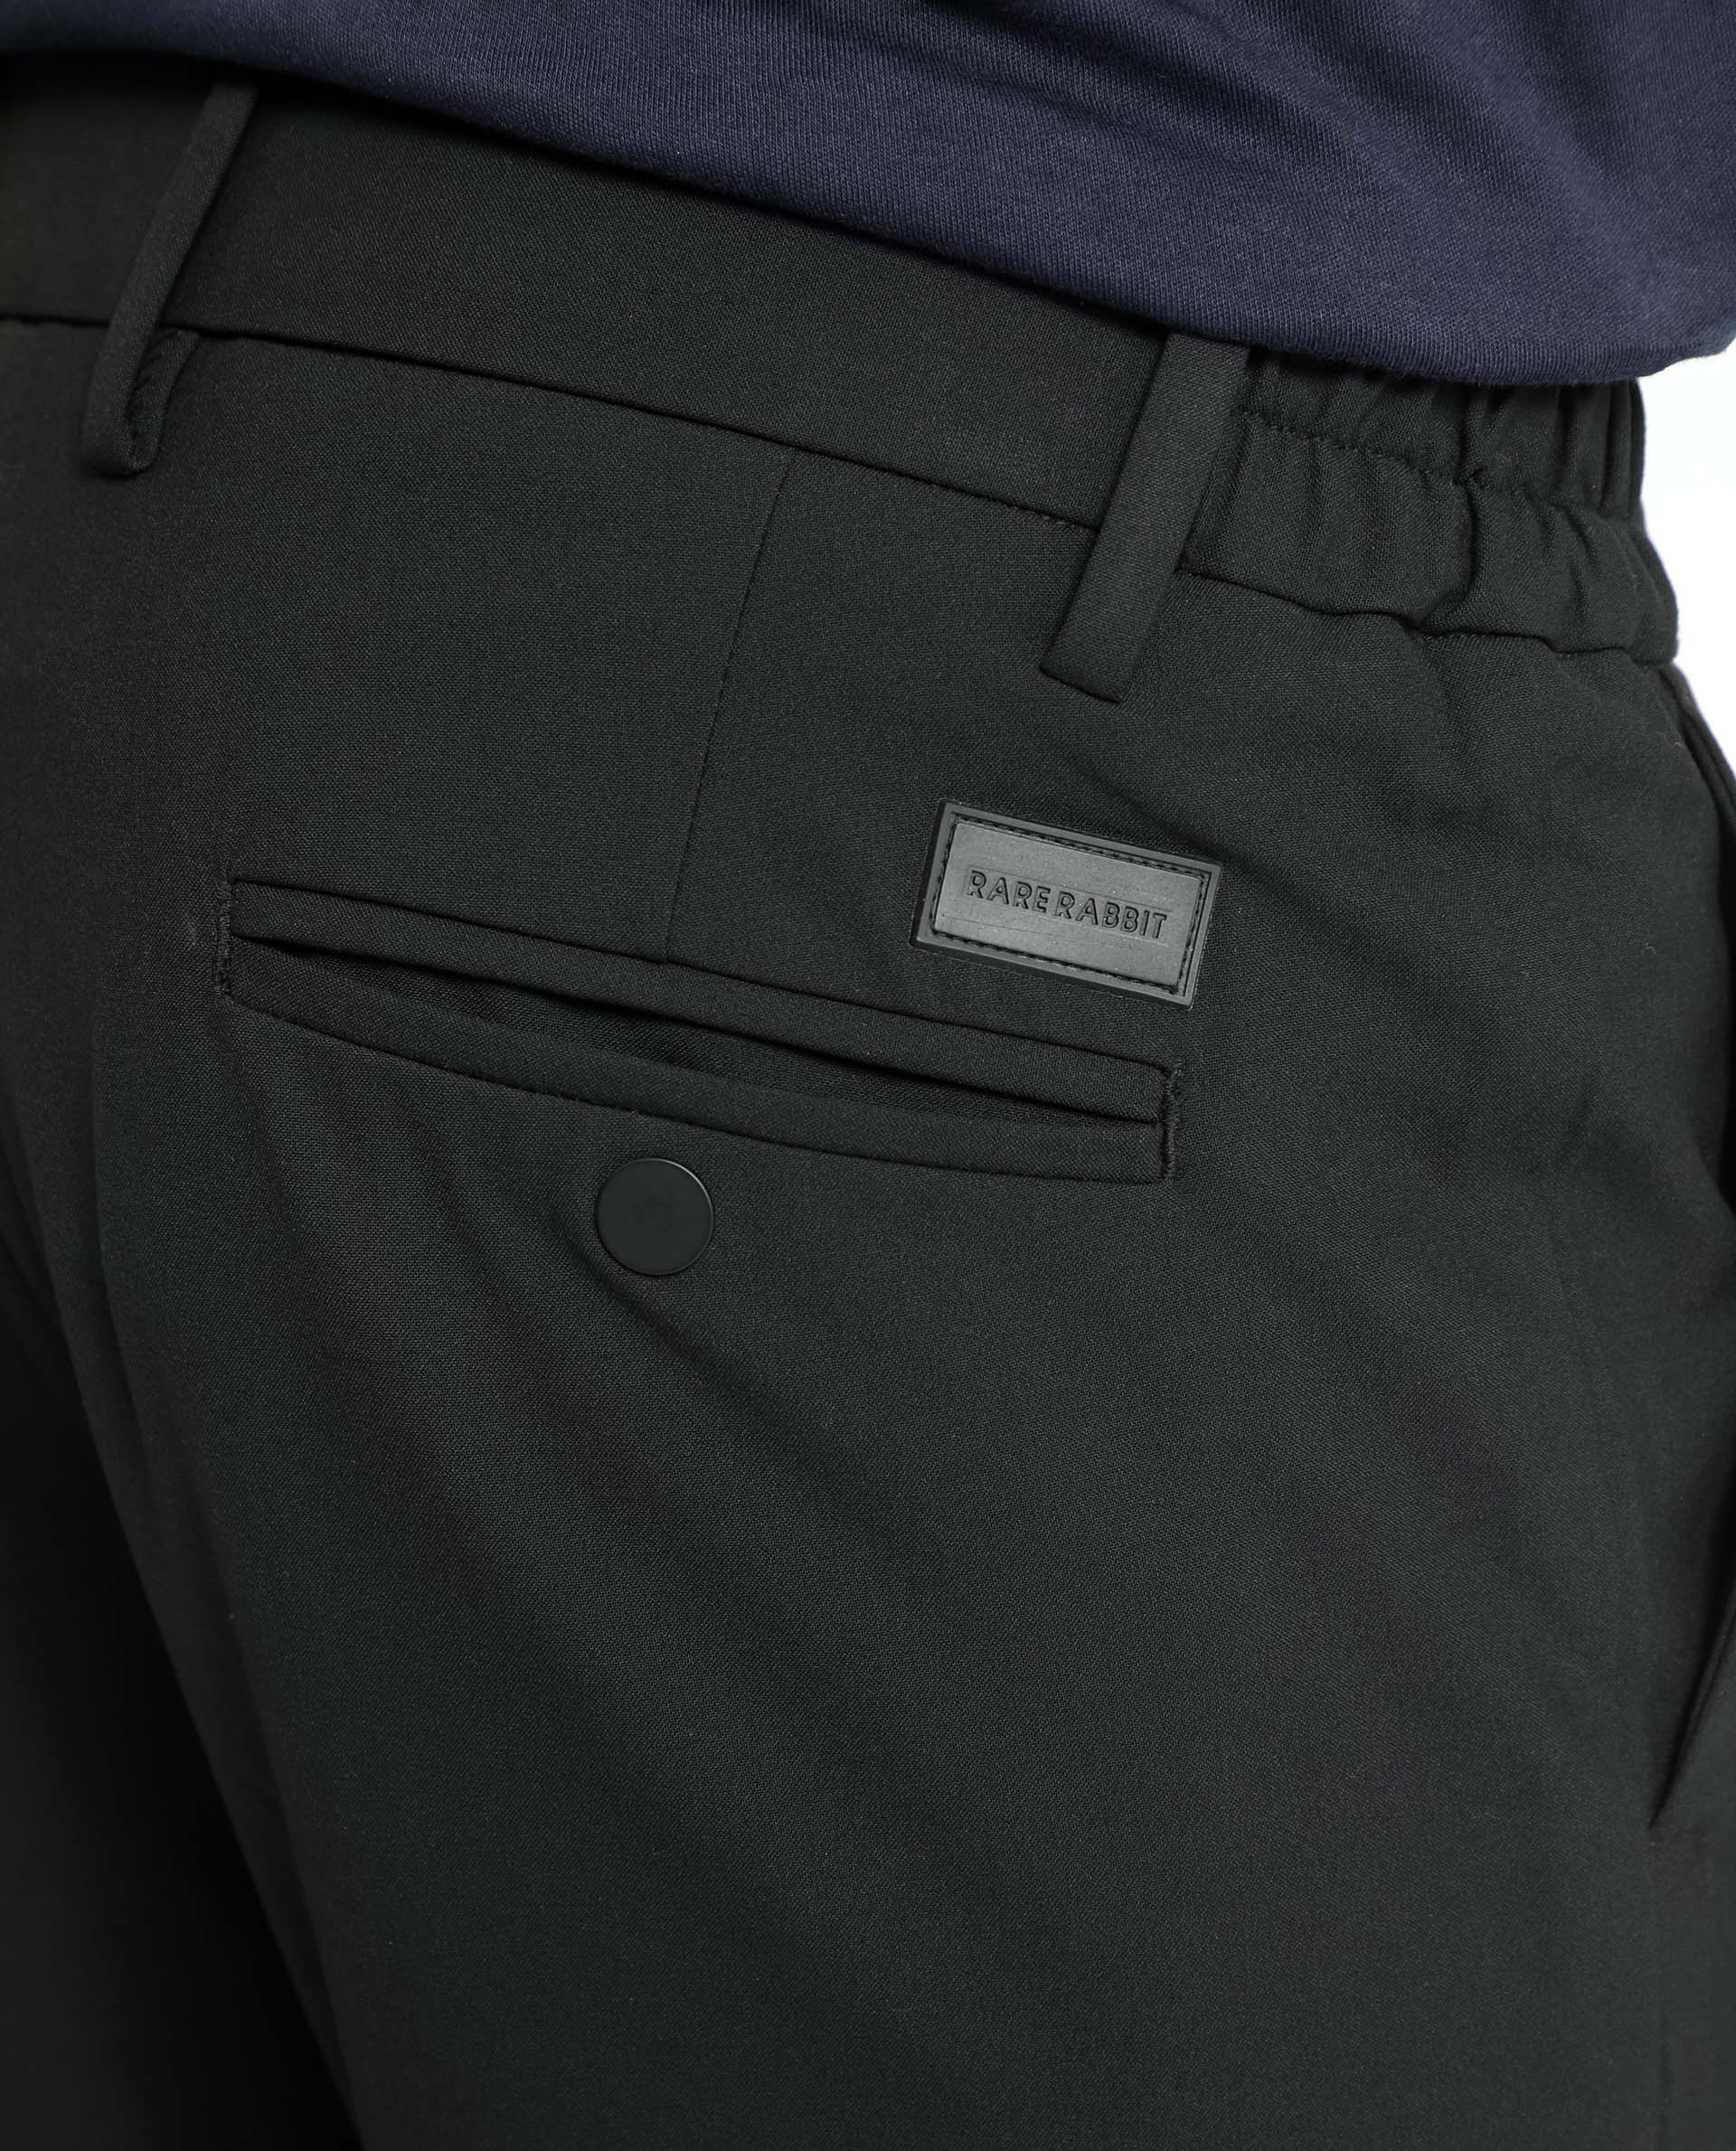 Buy RARE RABBIT Men's Slim Fit Travel Trouser (Green_32) at Amazon.in